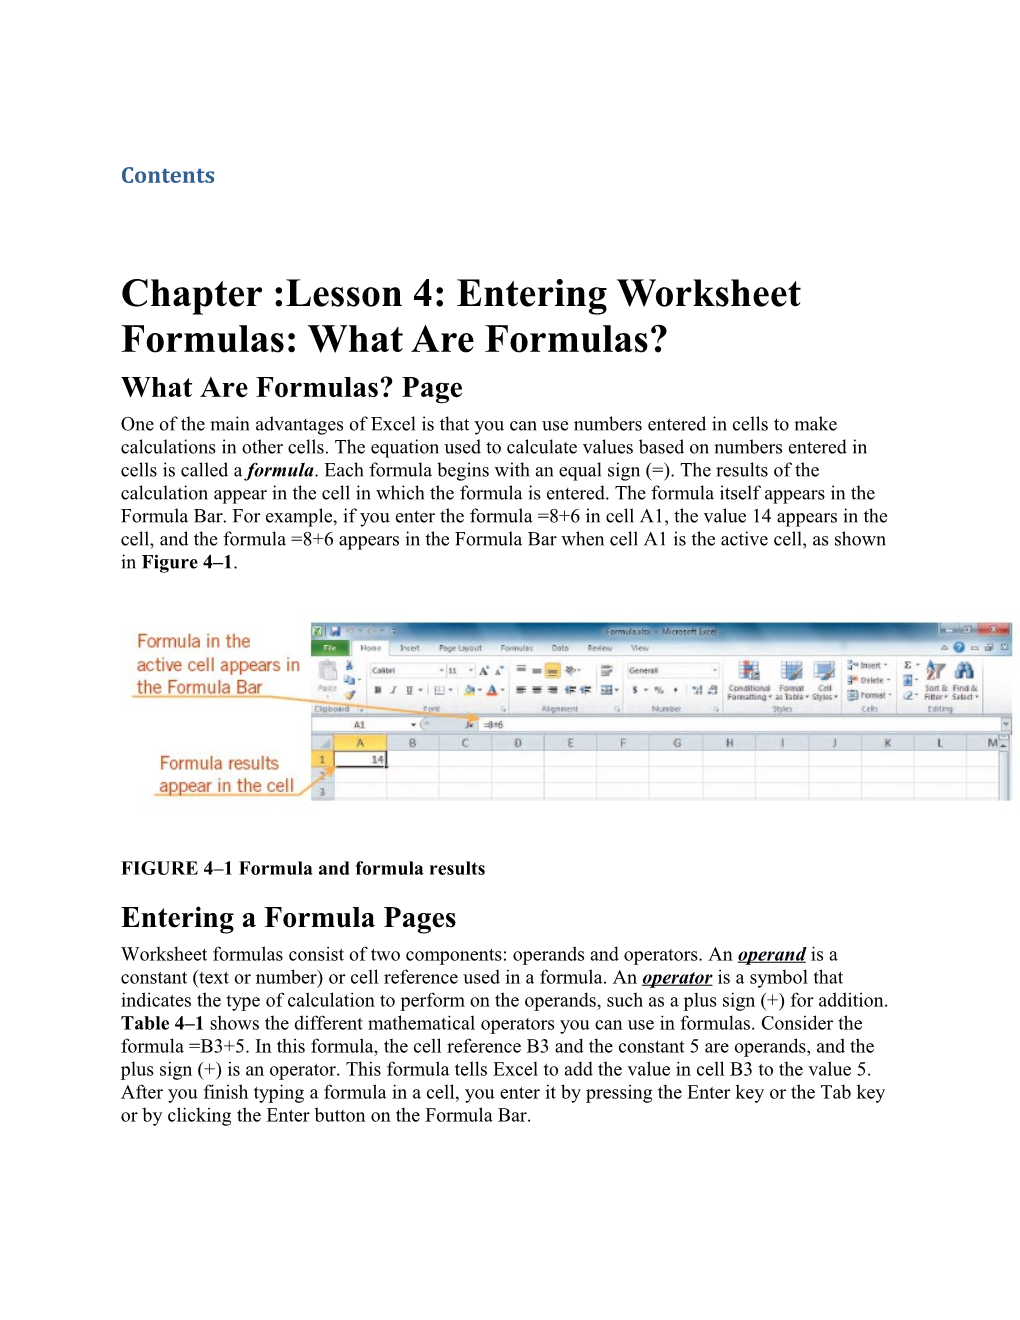 Chapter :Lesson 4: Entering Worksheet Formulas: What Are Formulas? 2